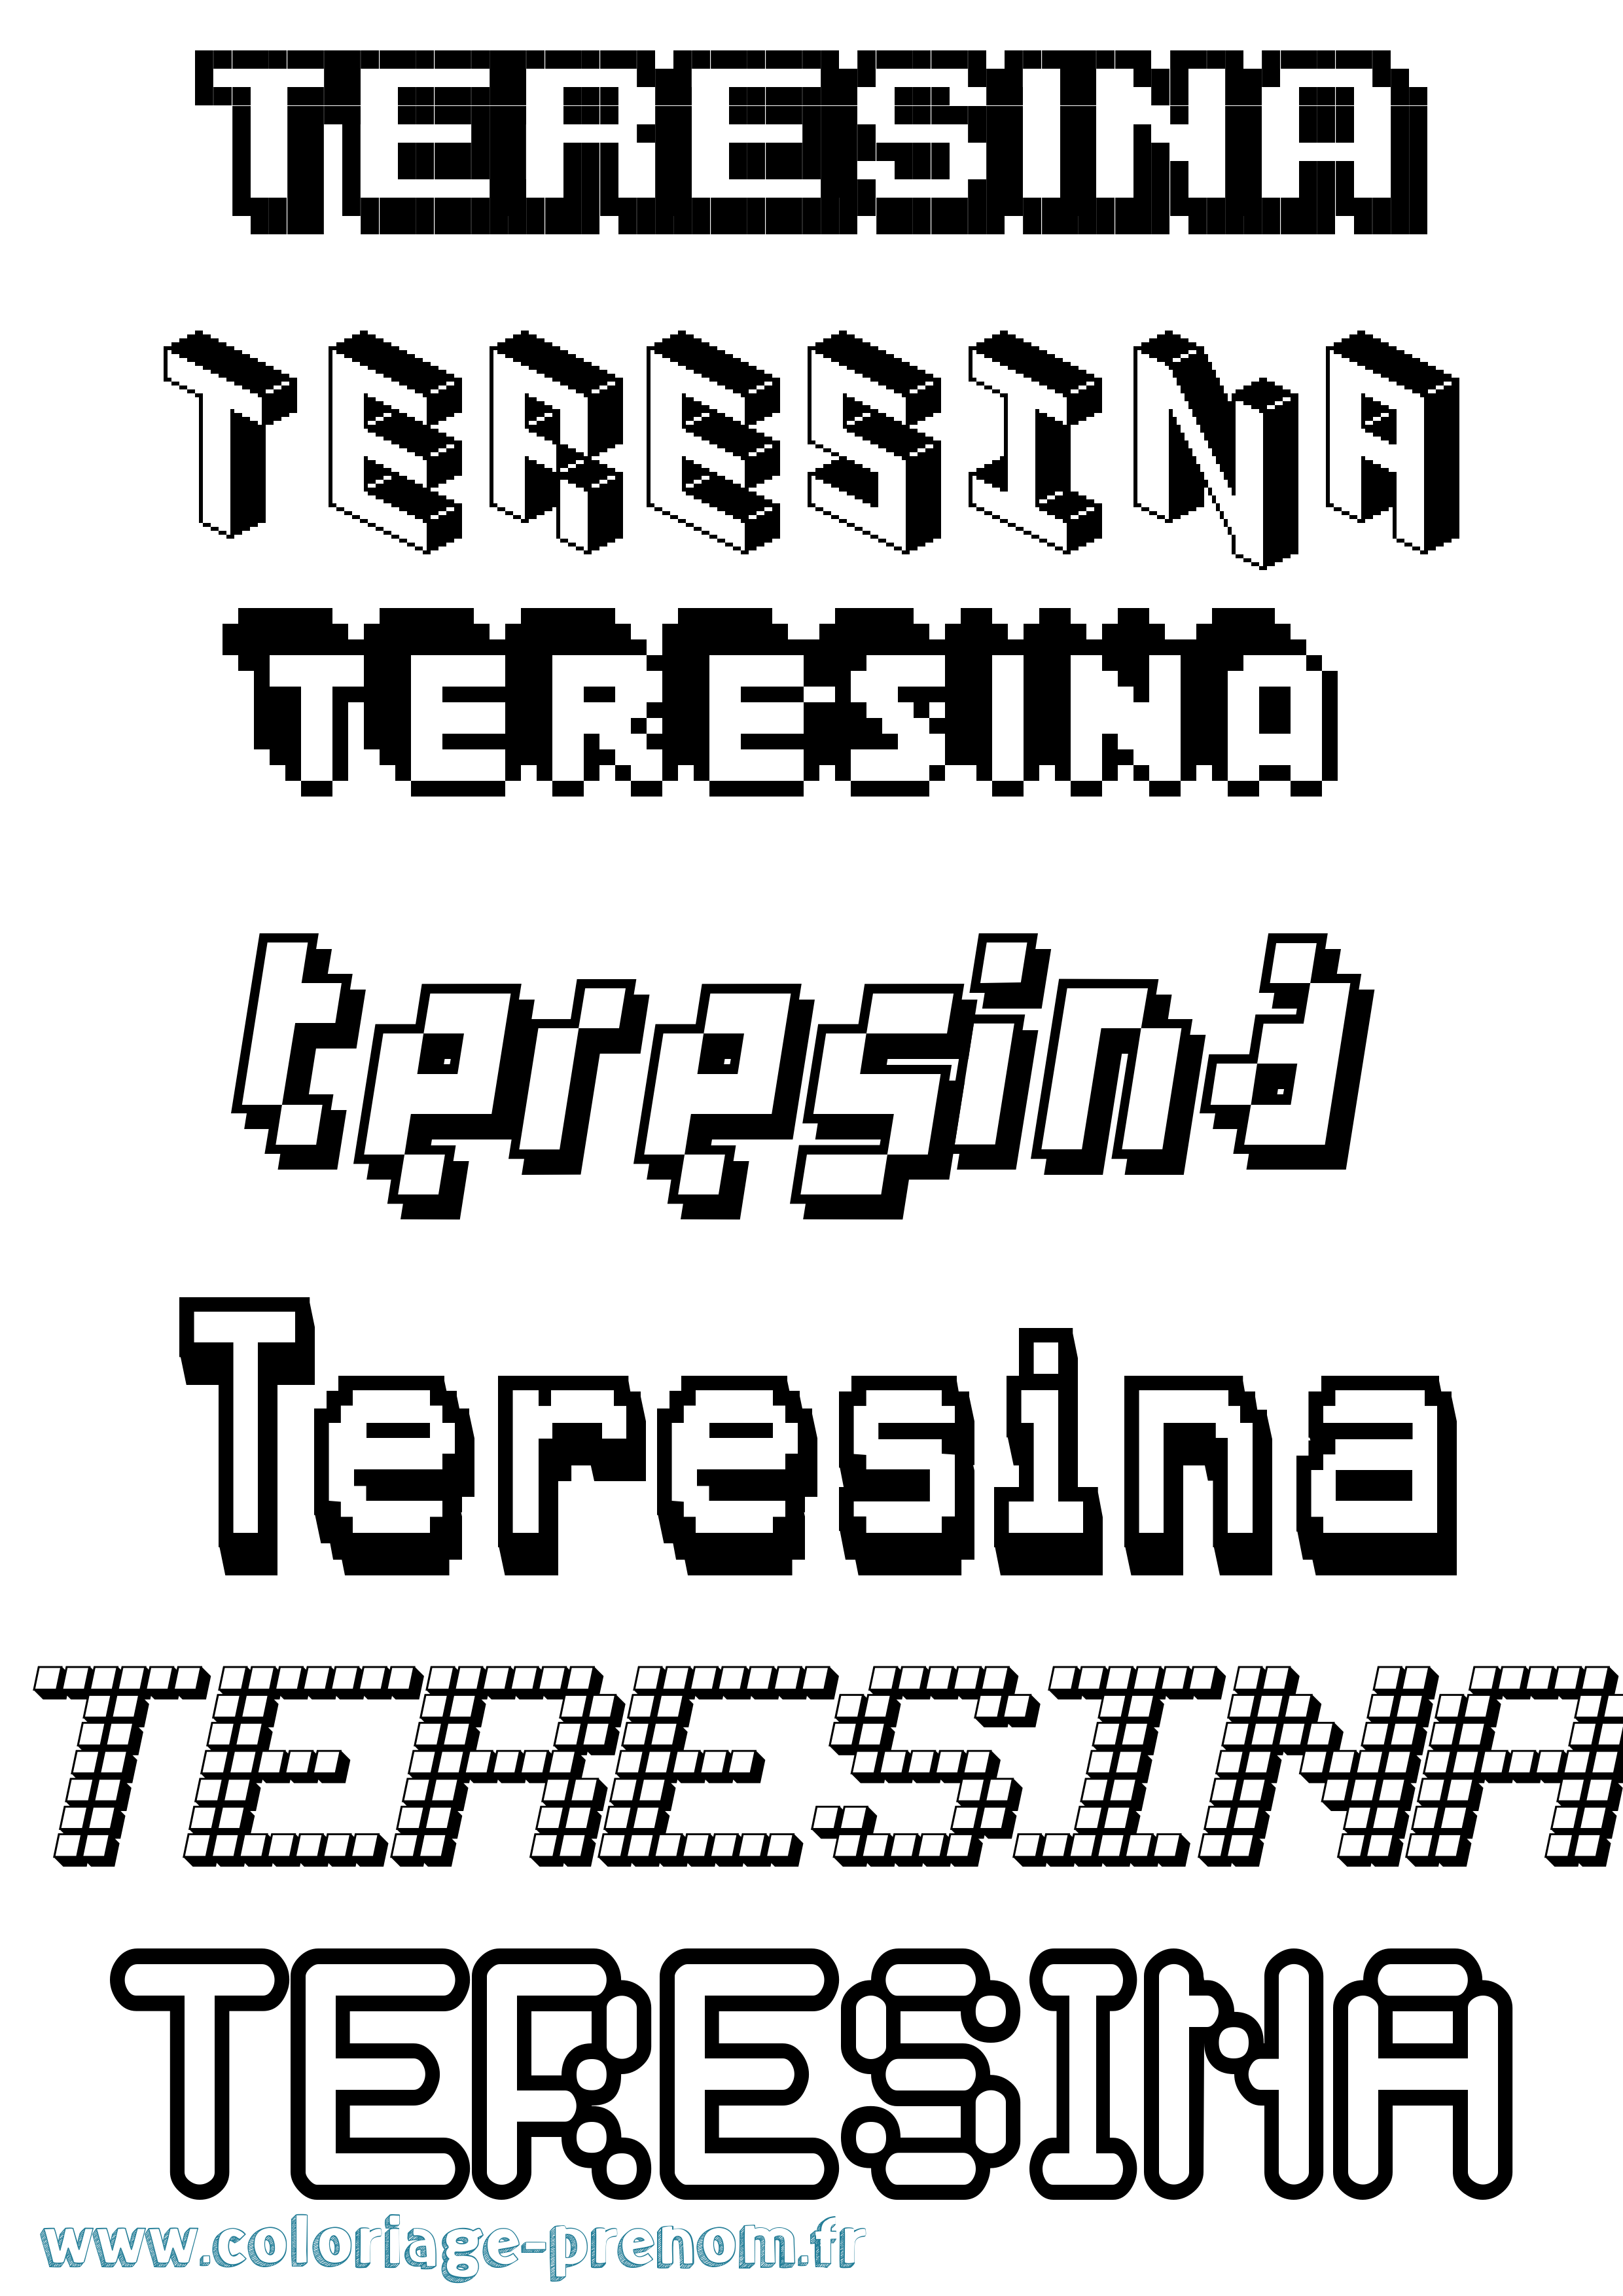 Coloriage prénom Teresina Pixel